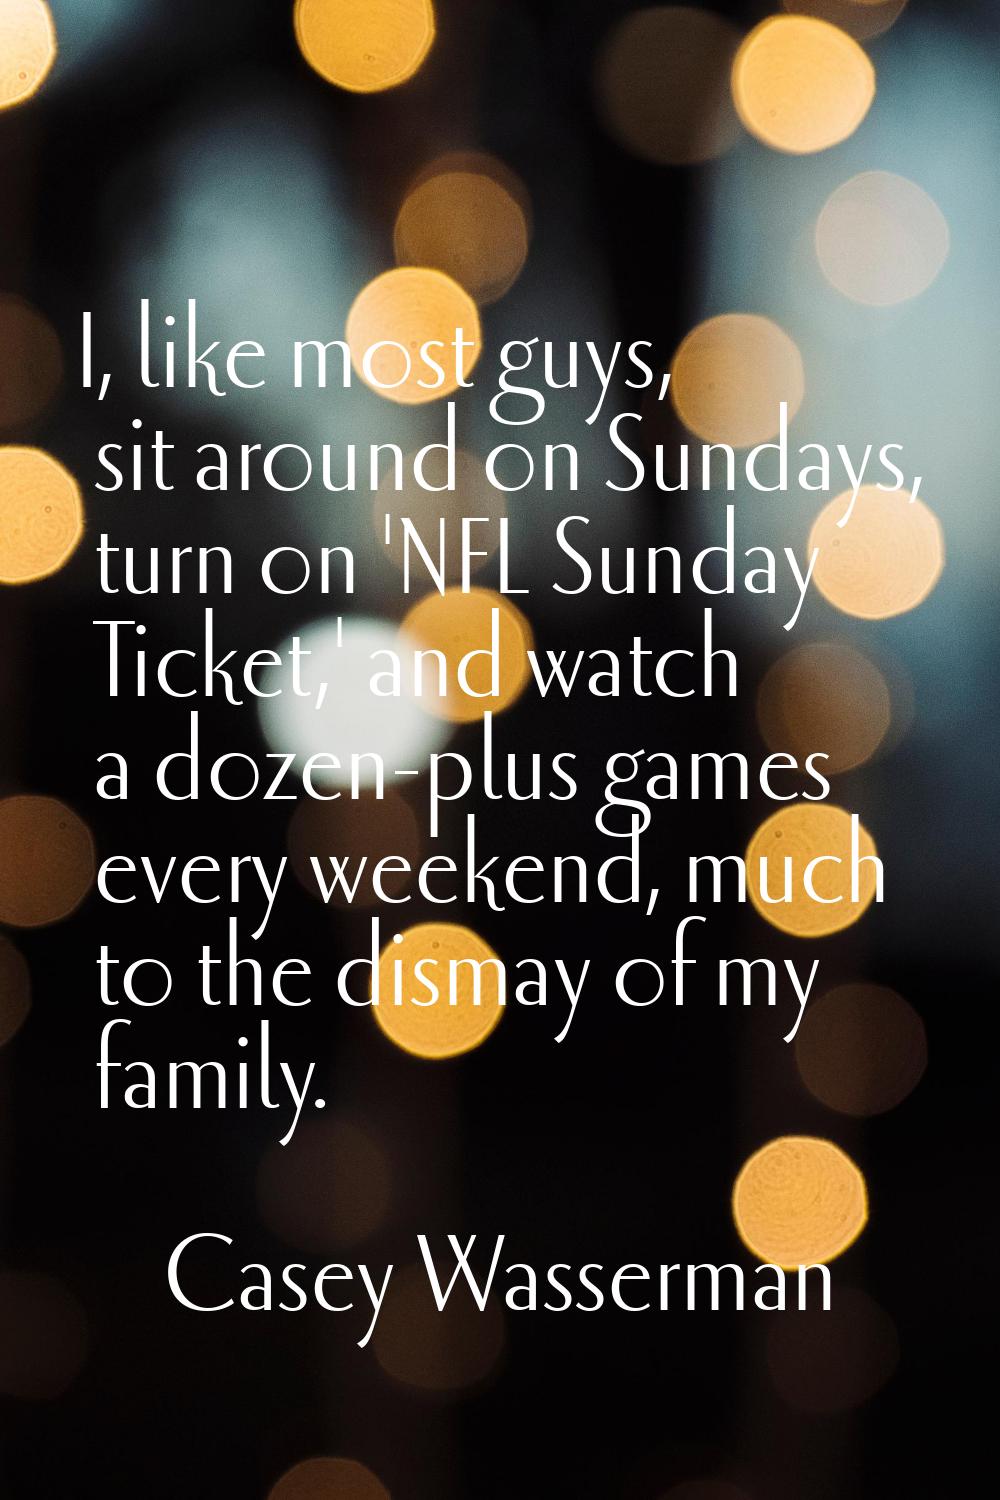 I, like most guys, sit around on Sundays, turn on 'NFL Sunday Ticket,' and watch a dozen-plus games